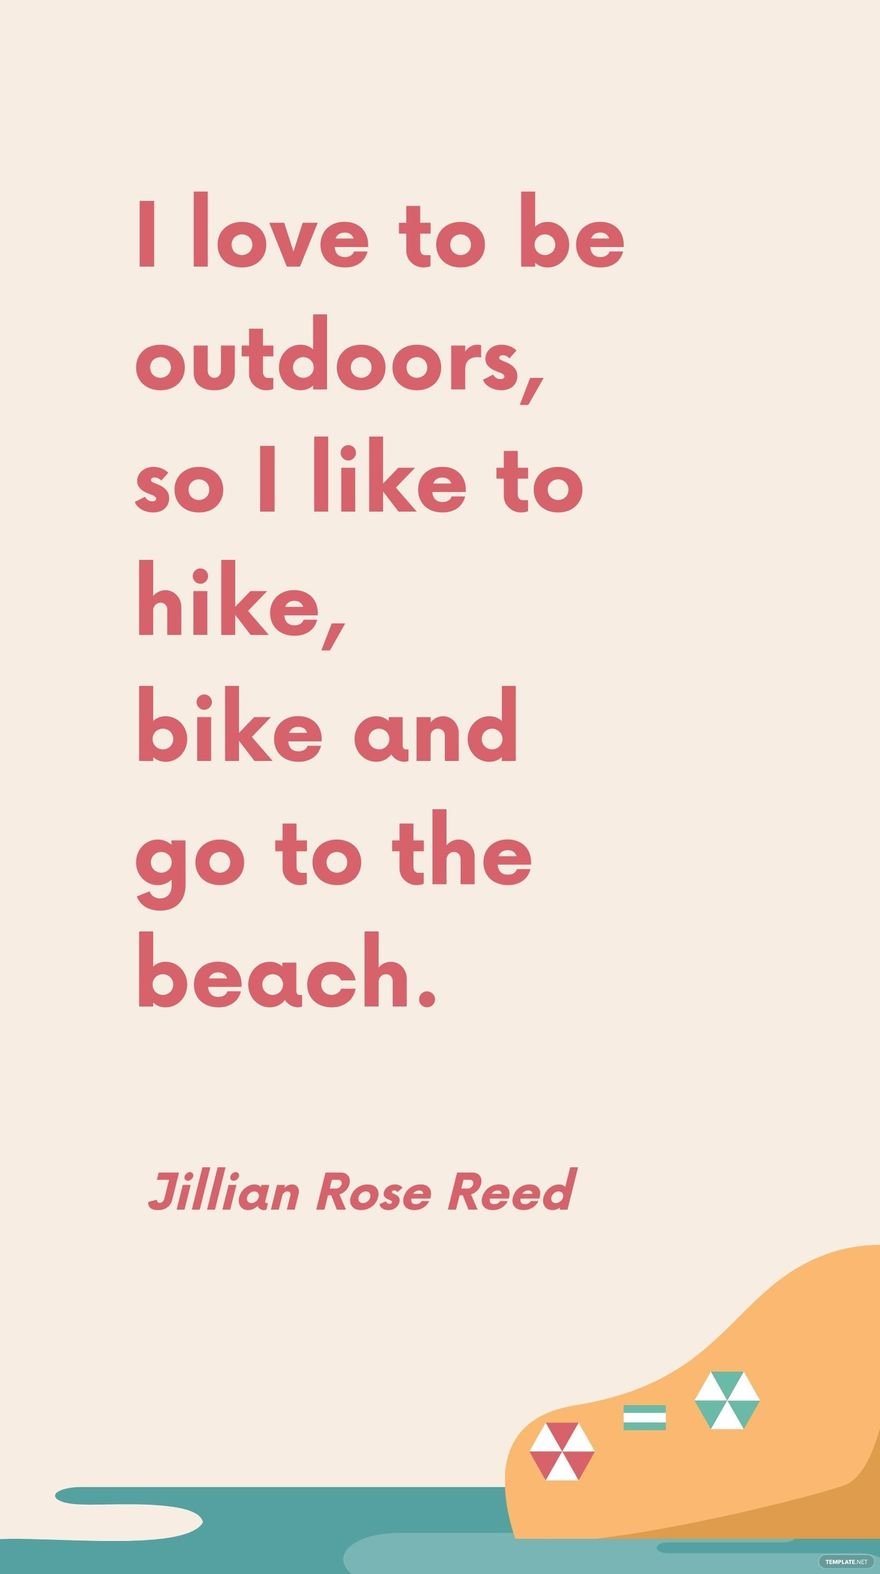 Free Jillian Rose Reed - I love to be outdoors, so I like to hike, bike and go to the beach. in JPG